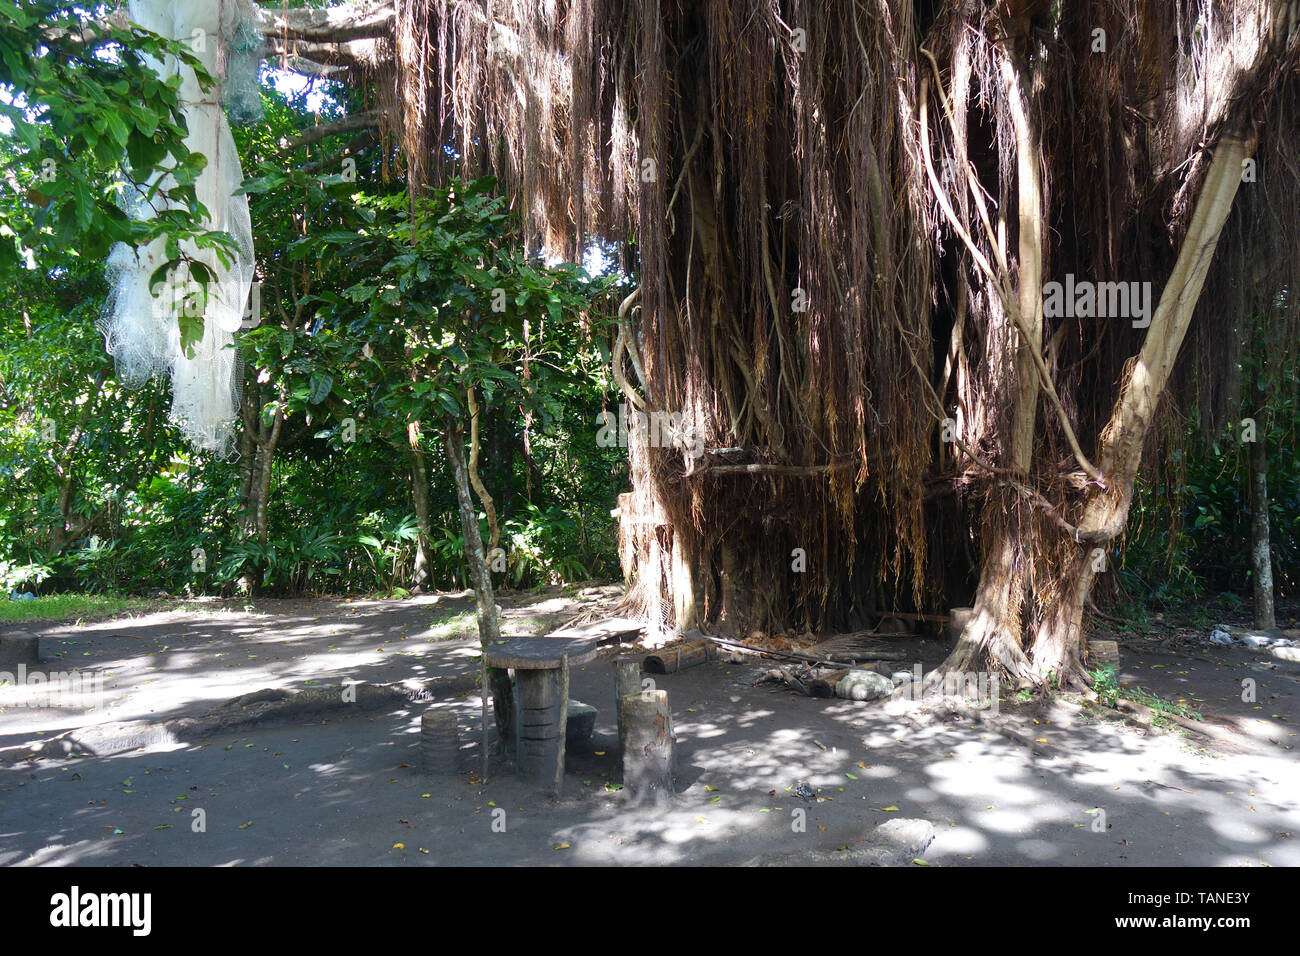 Nakamal (kava-drinking place) under banyan tree, Port Resolution, Tanna, Vanuatu. No PR Stock Photo